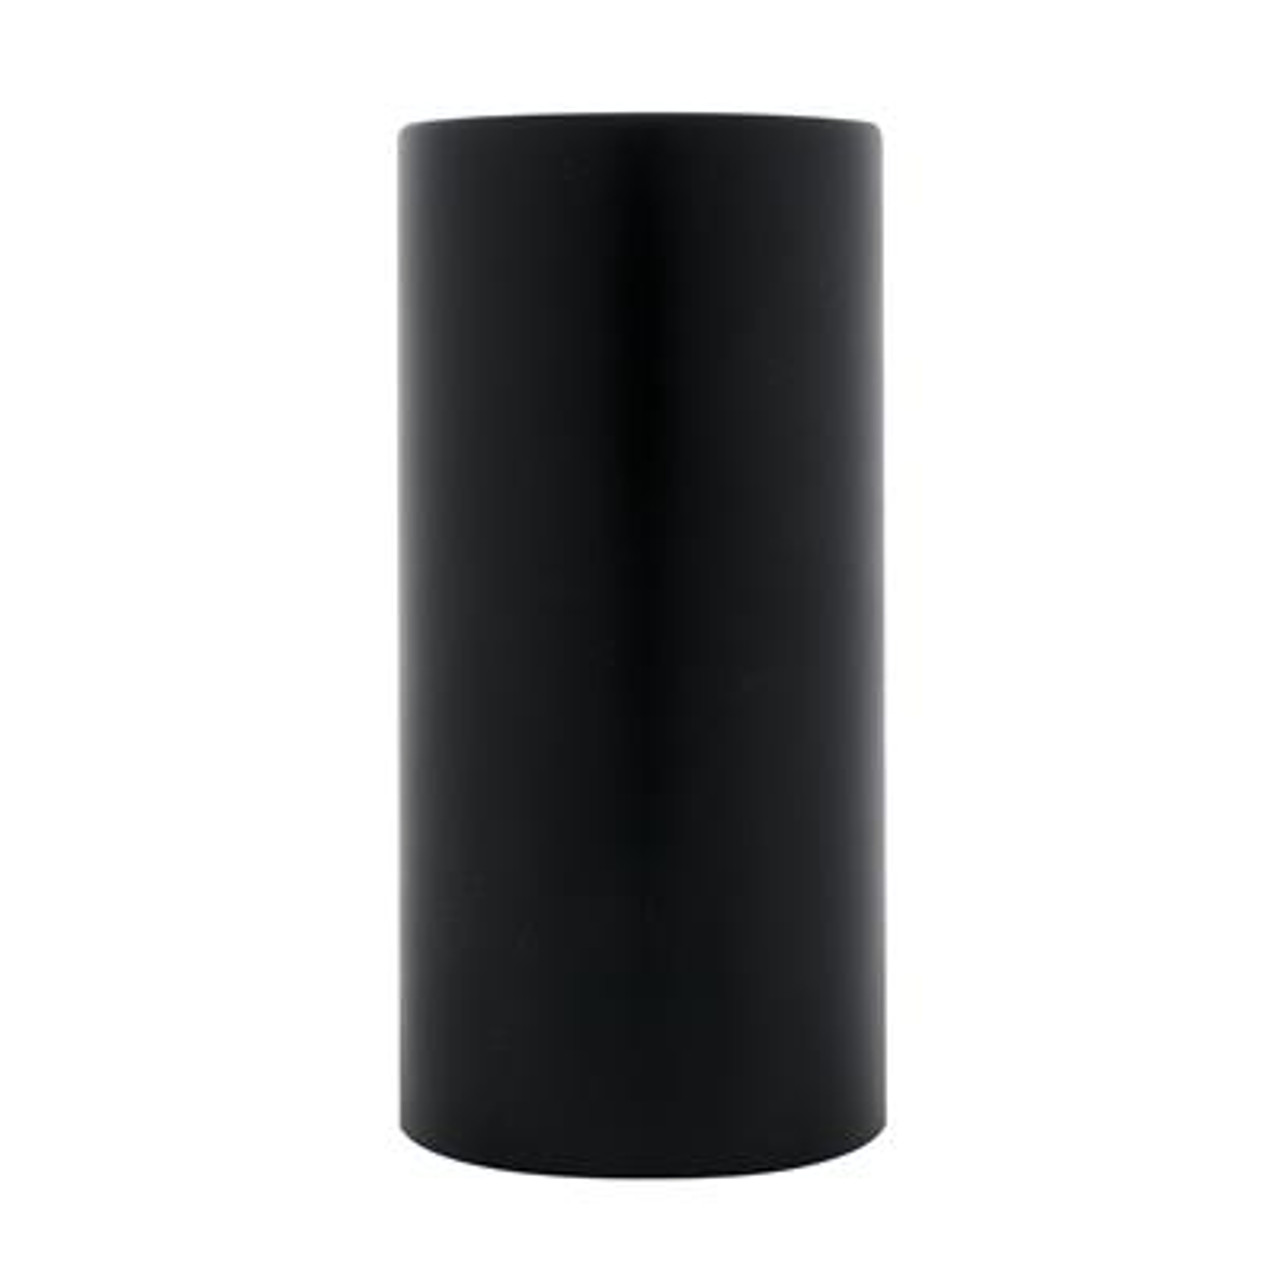 33mm X 4-1/4" Matte Black Tall Cylinder Nut Cover - Thread-On (Bulk)